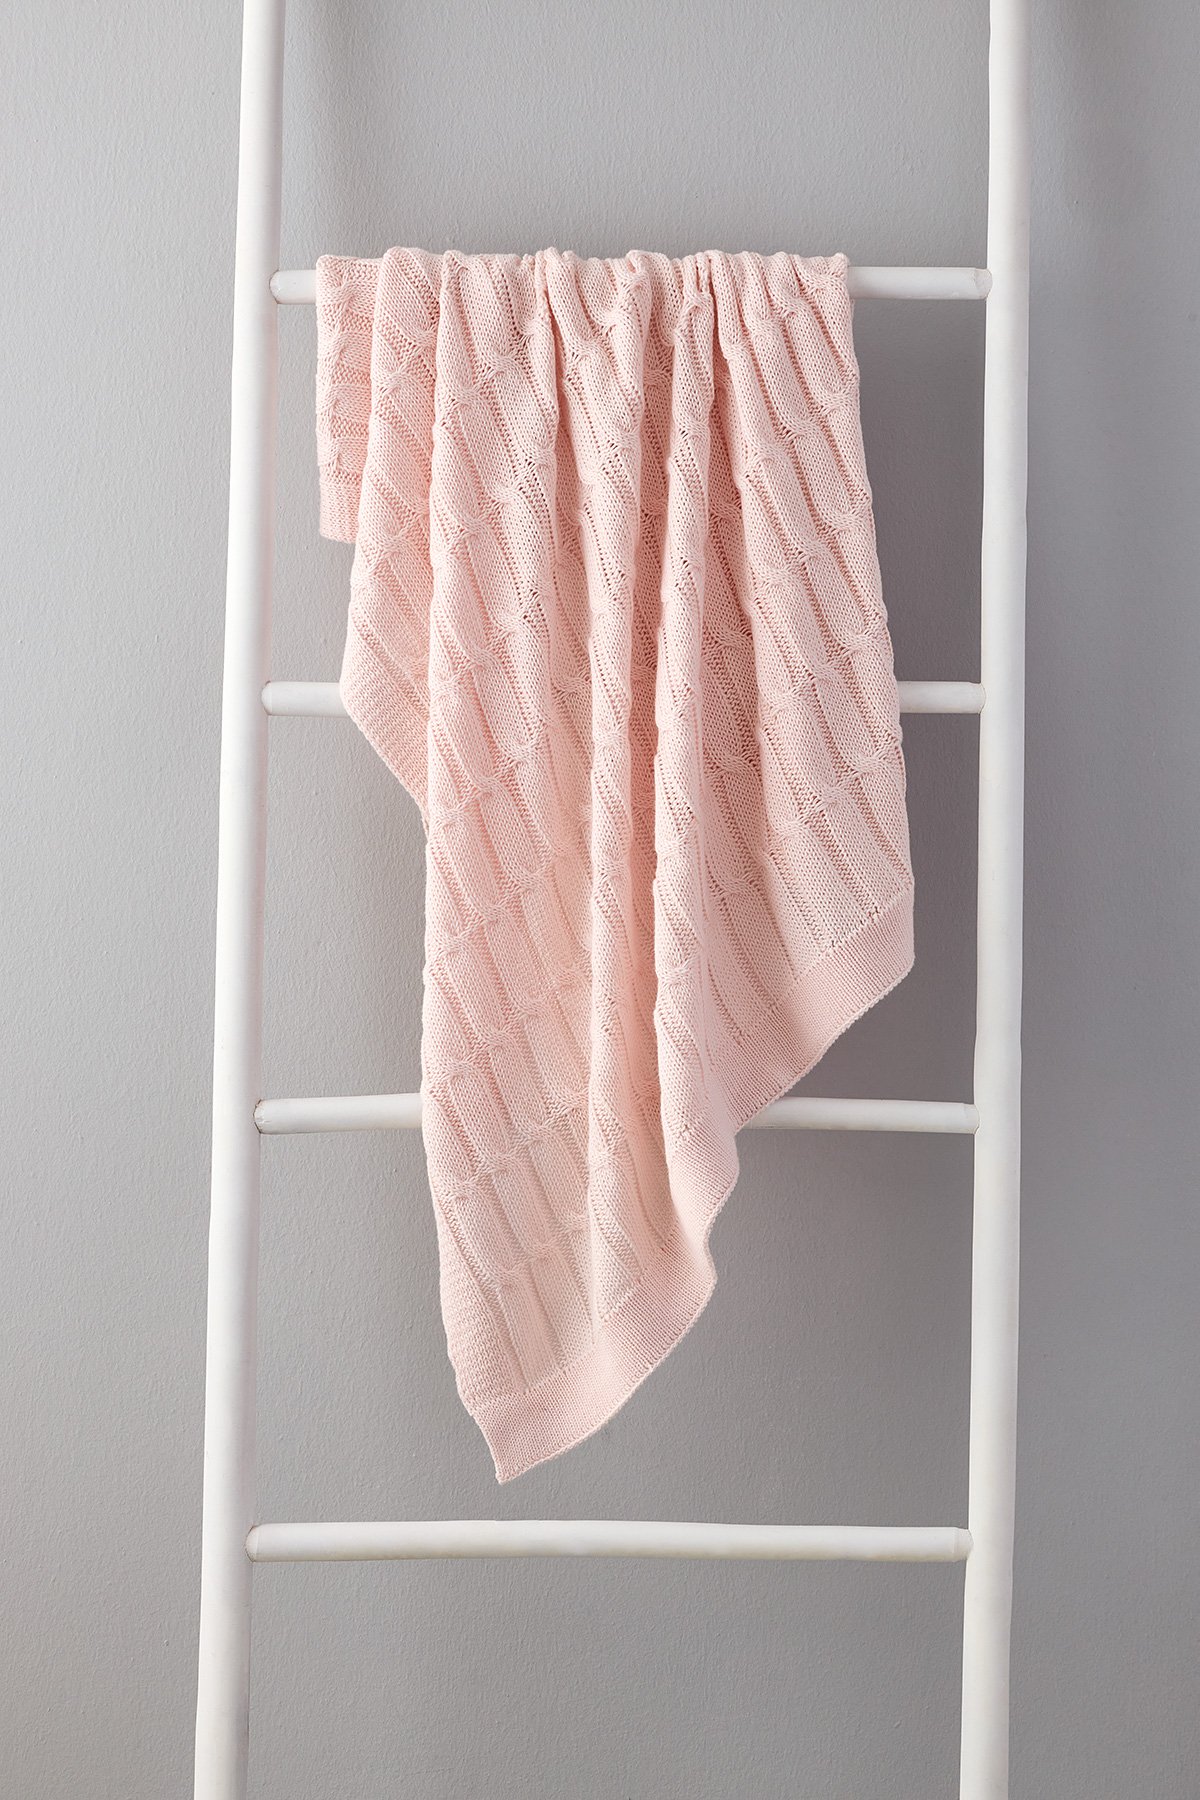 Braid Βρεφική Κουβέρτα Ροζ, κρεμασμένη